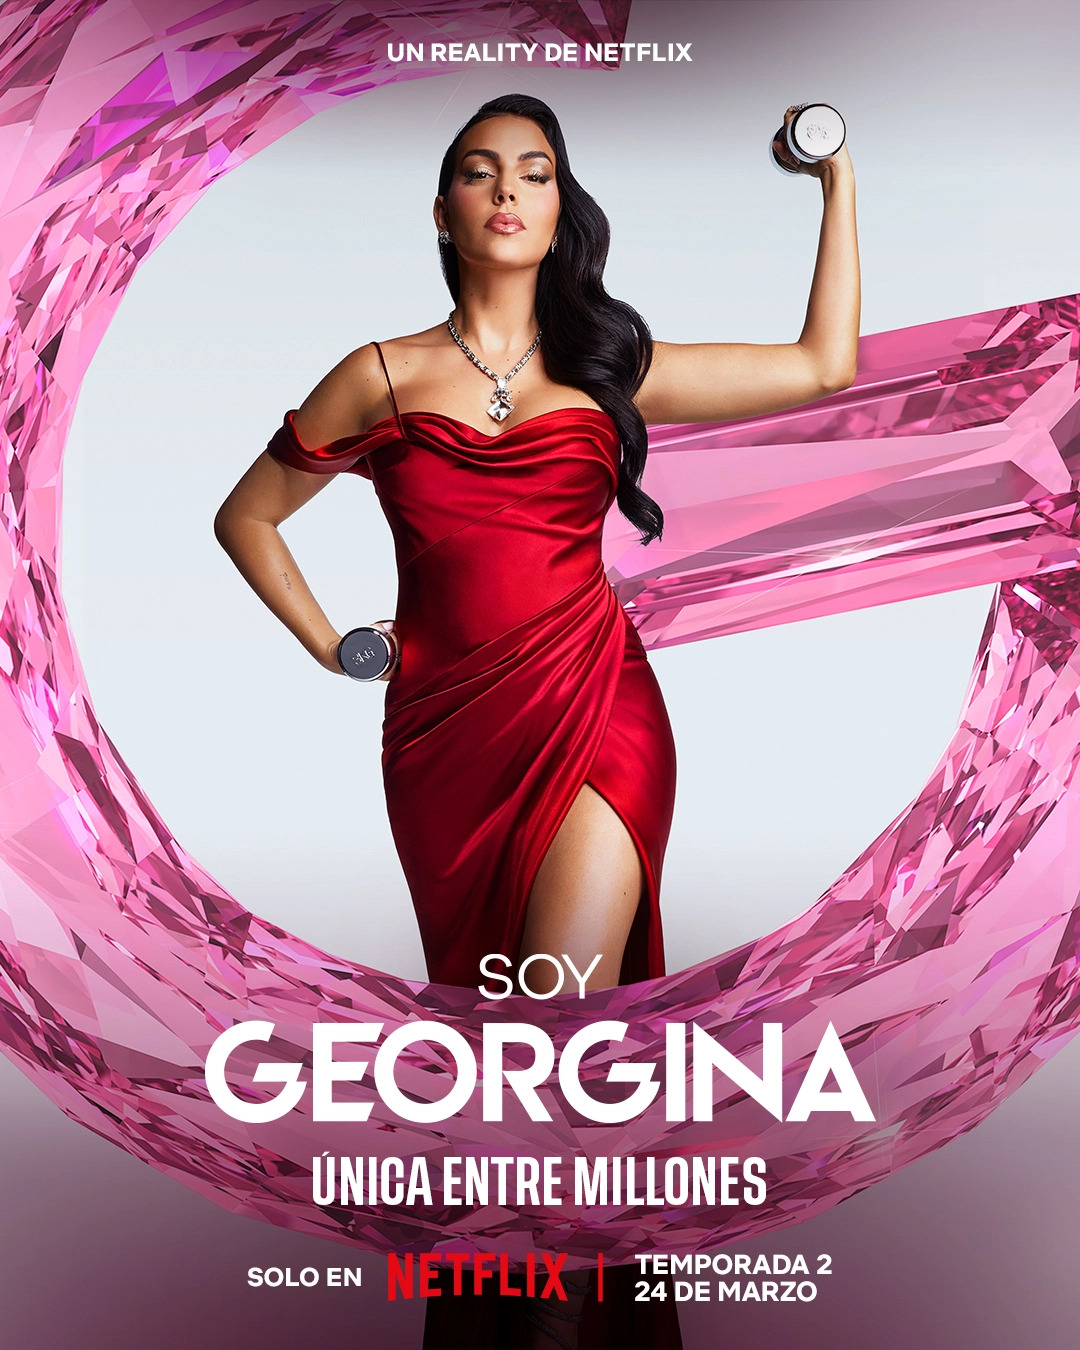 Extra Large TV Poster Image for I am Georgina (#5 of 7)